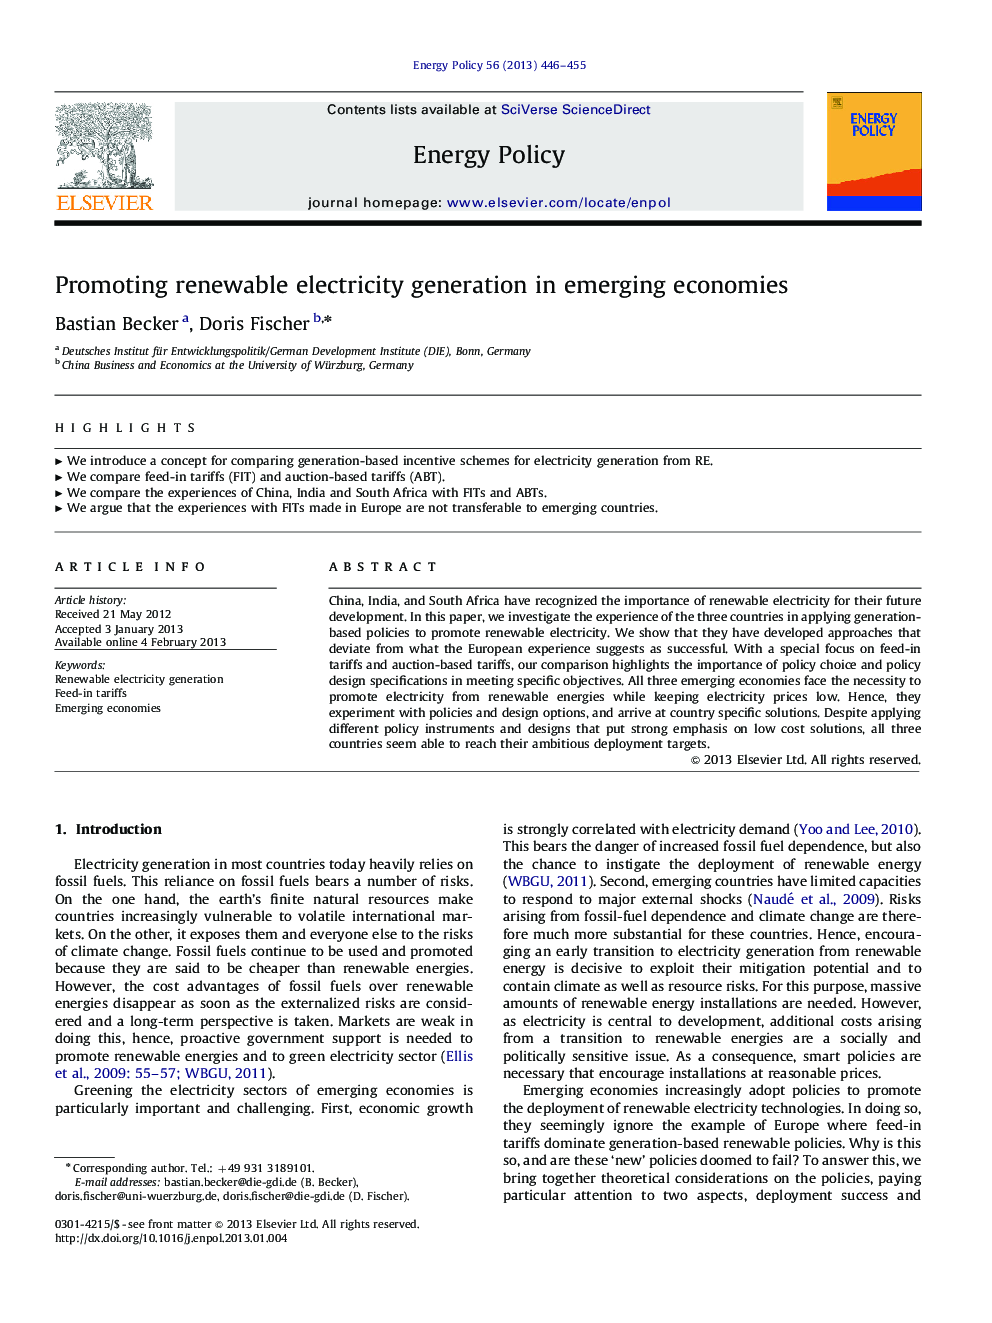 Promoting renewable electricity generation in emerging economies